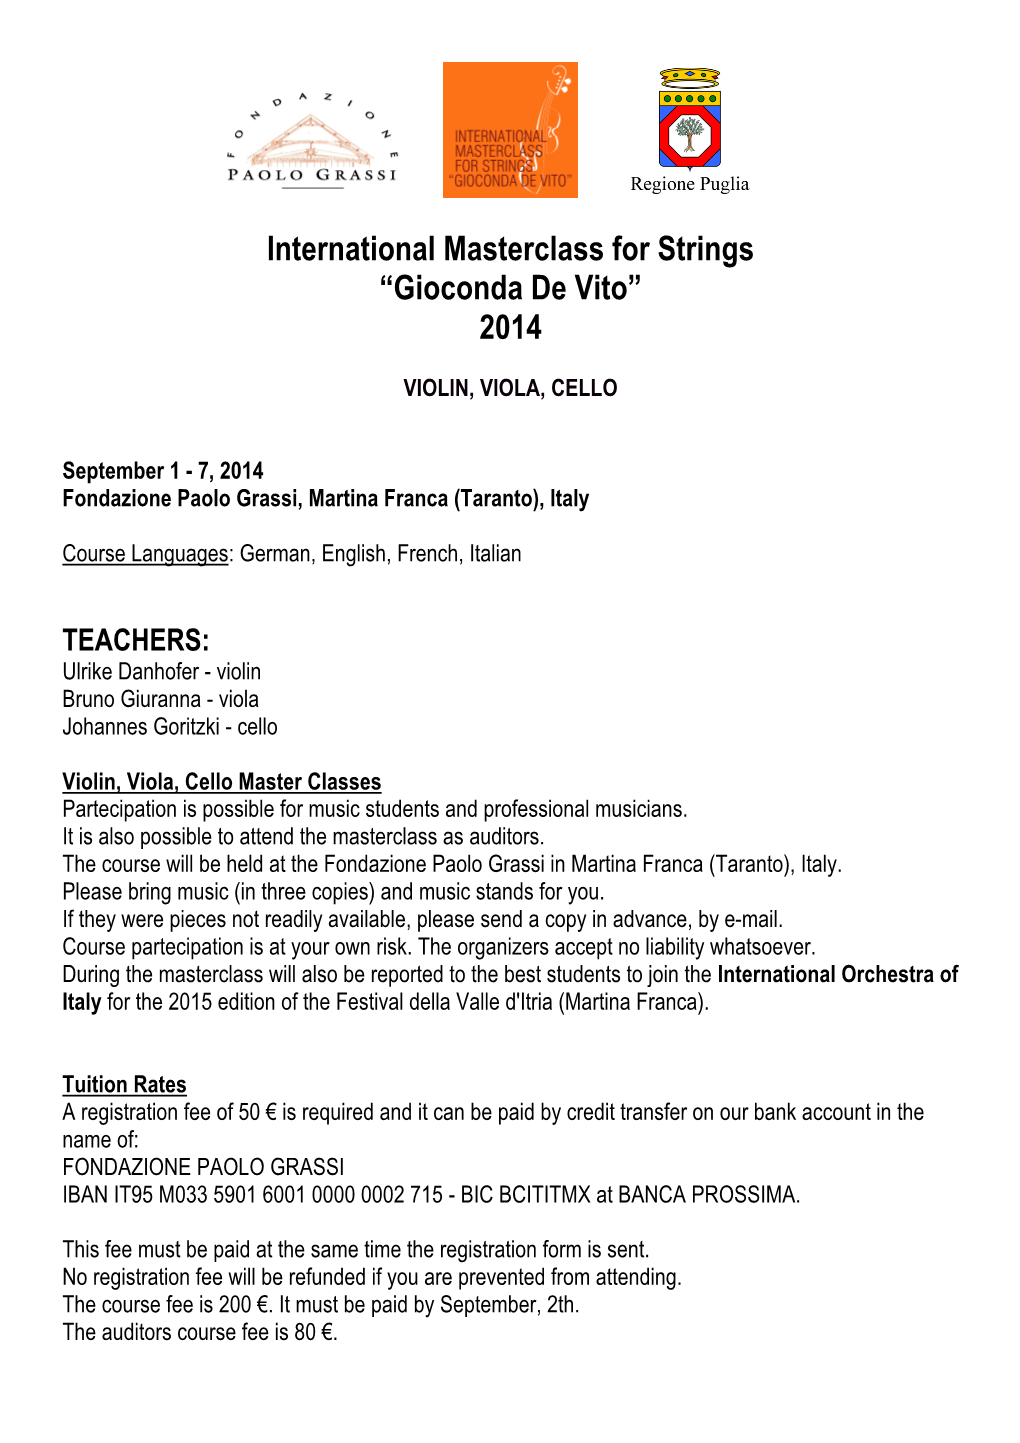 International Masterclass for Strings “Gioconda De Vito” 2014